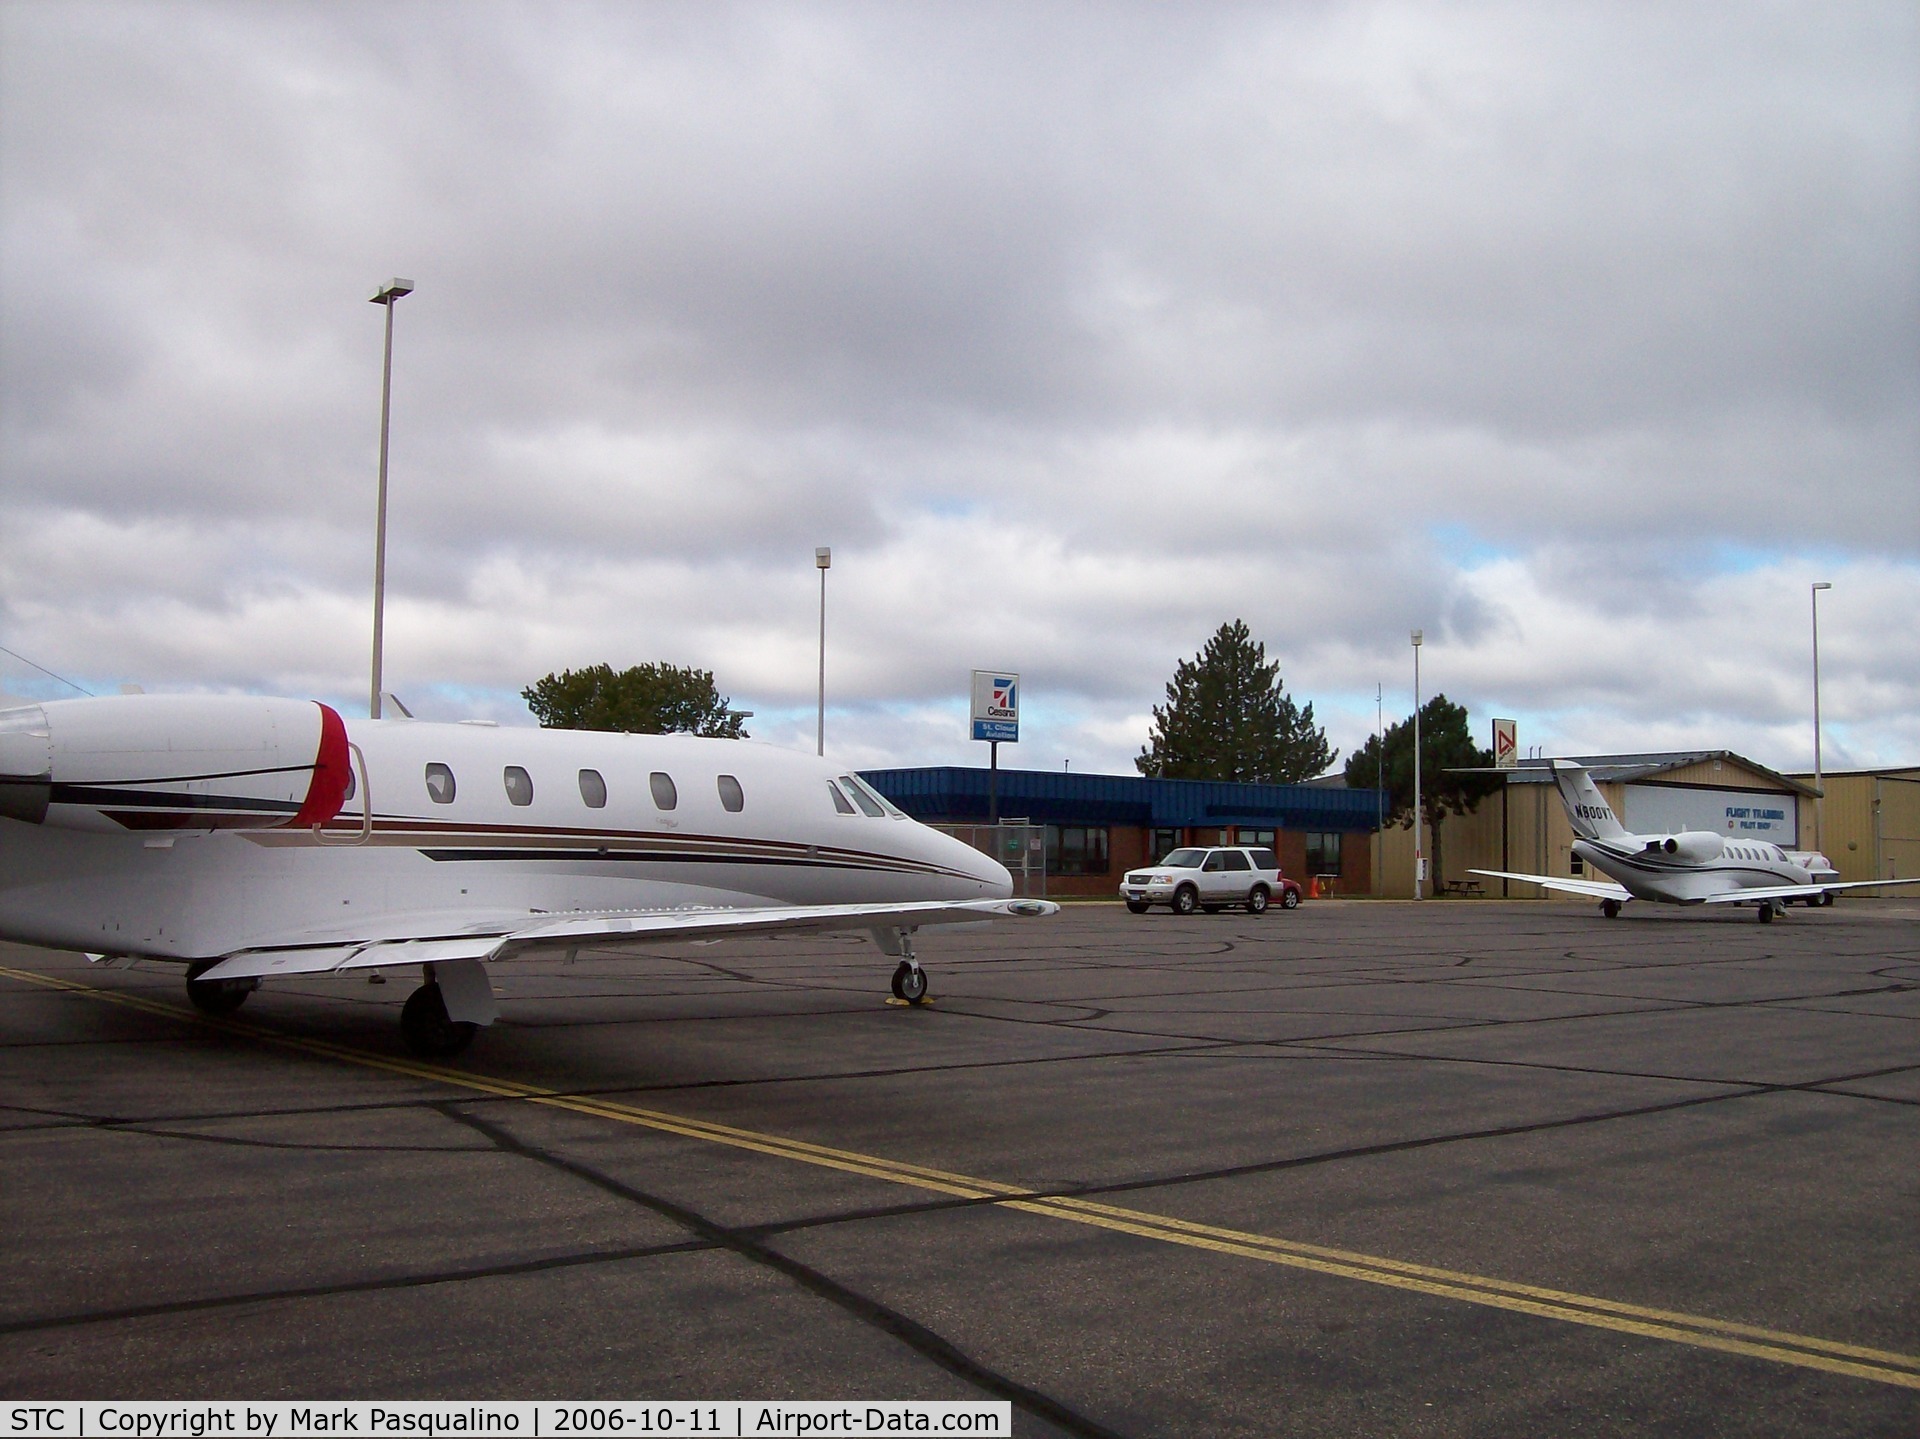 St Cloud Regional Airport (STC) - General Aviation Ramp